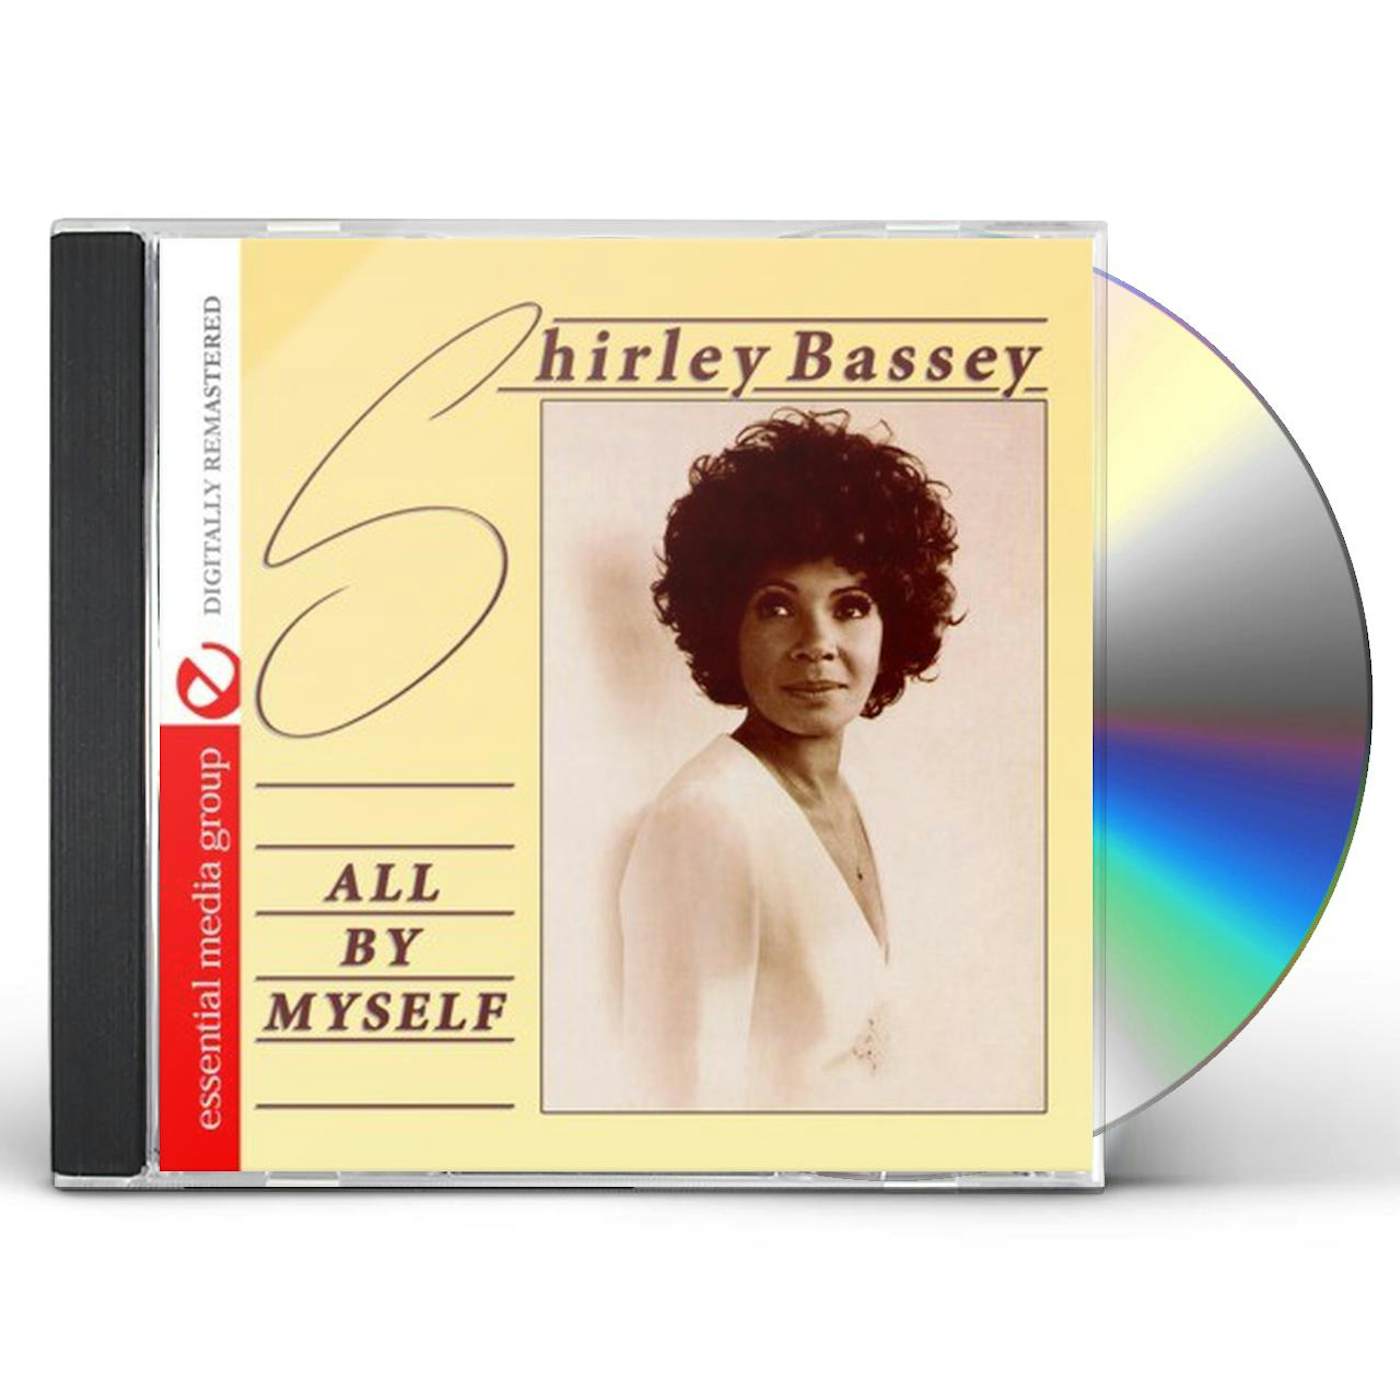 Shirley Bassey ALL BY MYSELF CD